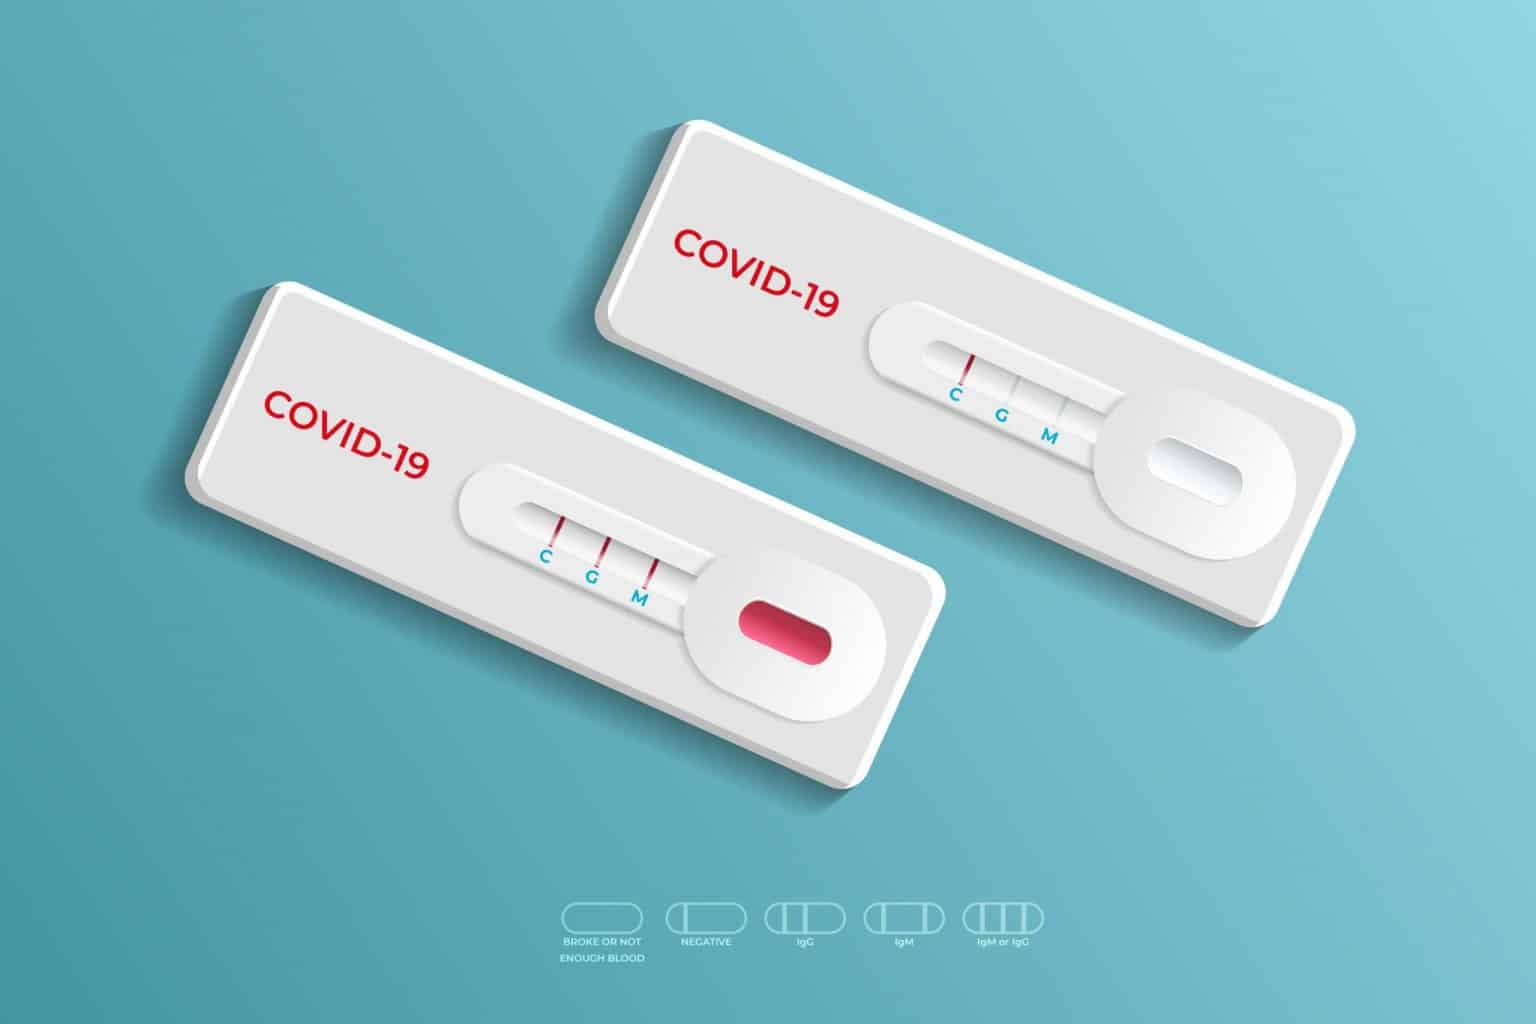 exames de coronavírus pelo plano de saúde